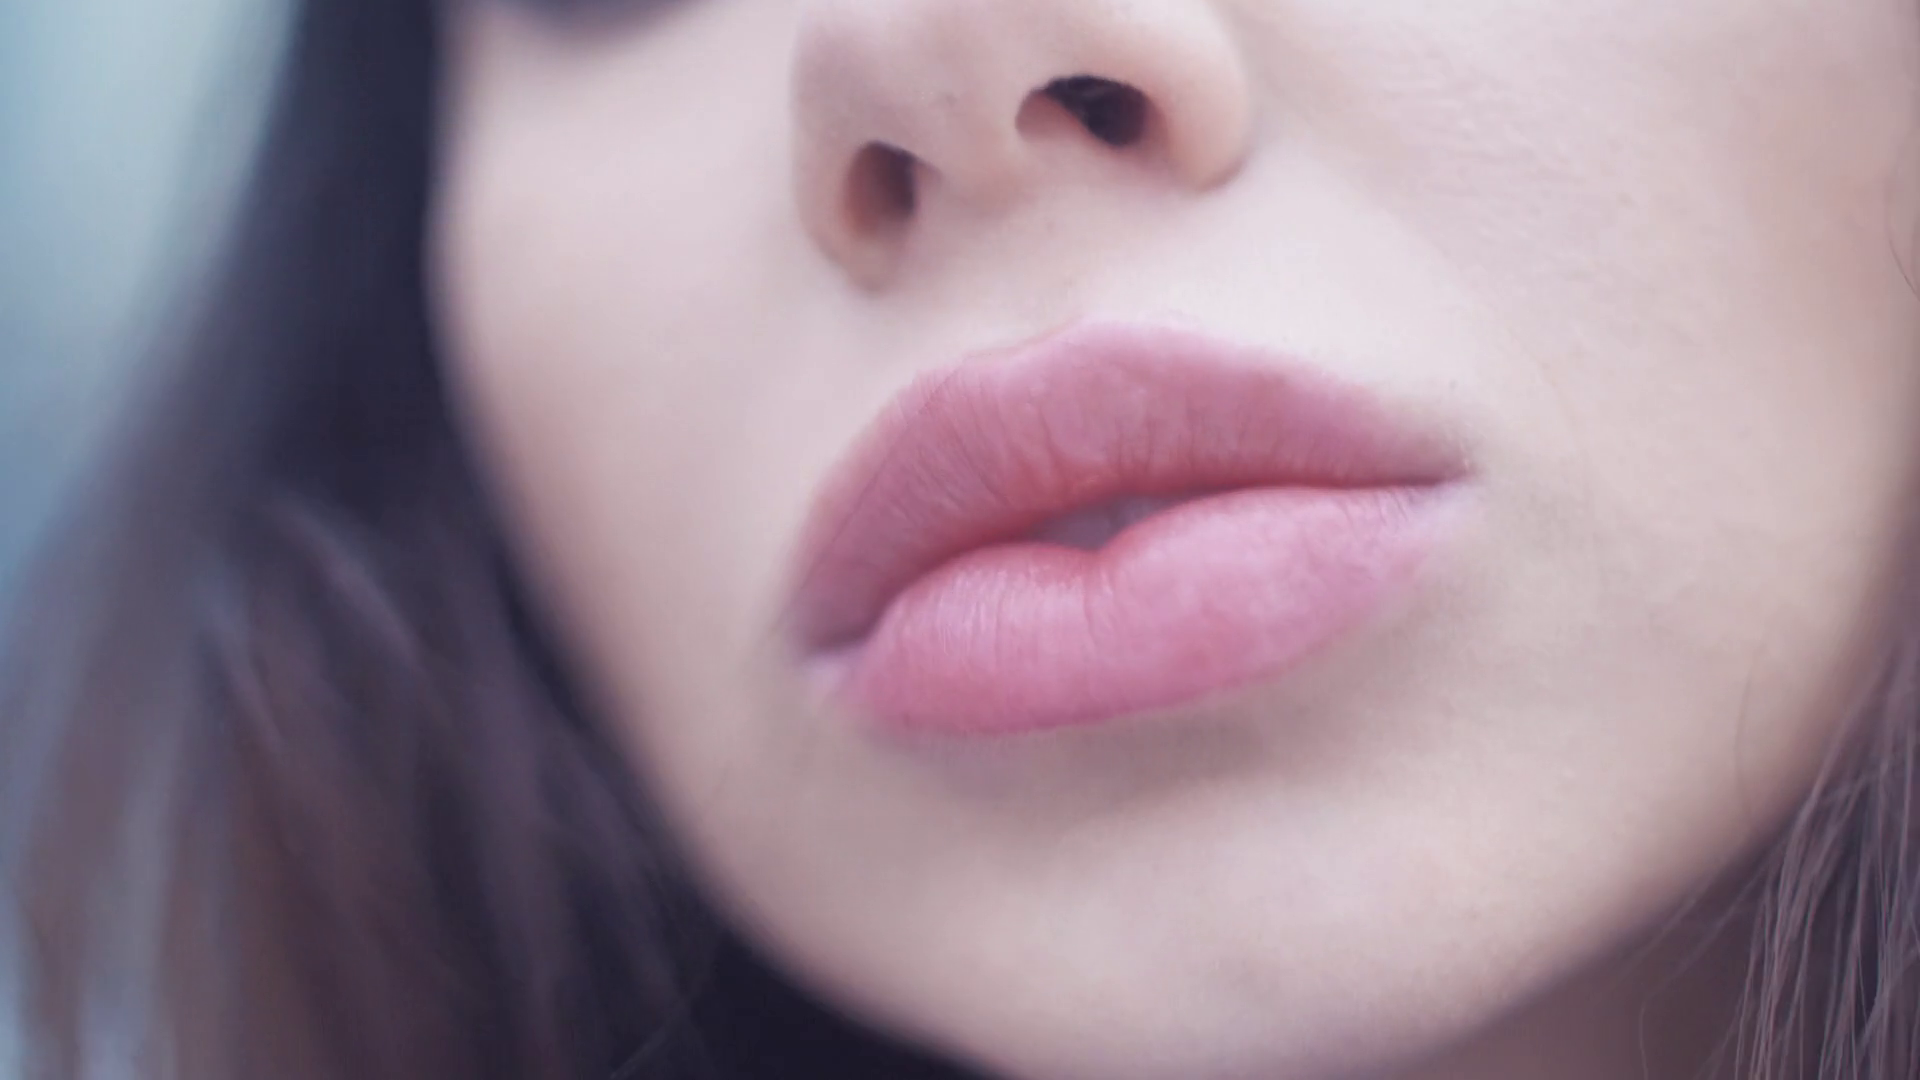 Passionate European woman bites plump pink lips. Extreme Close Up ...